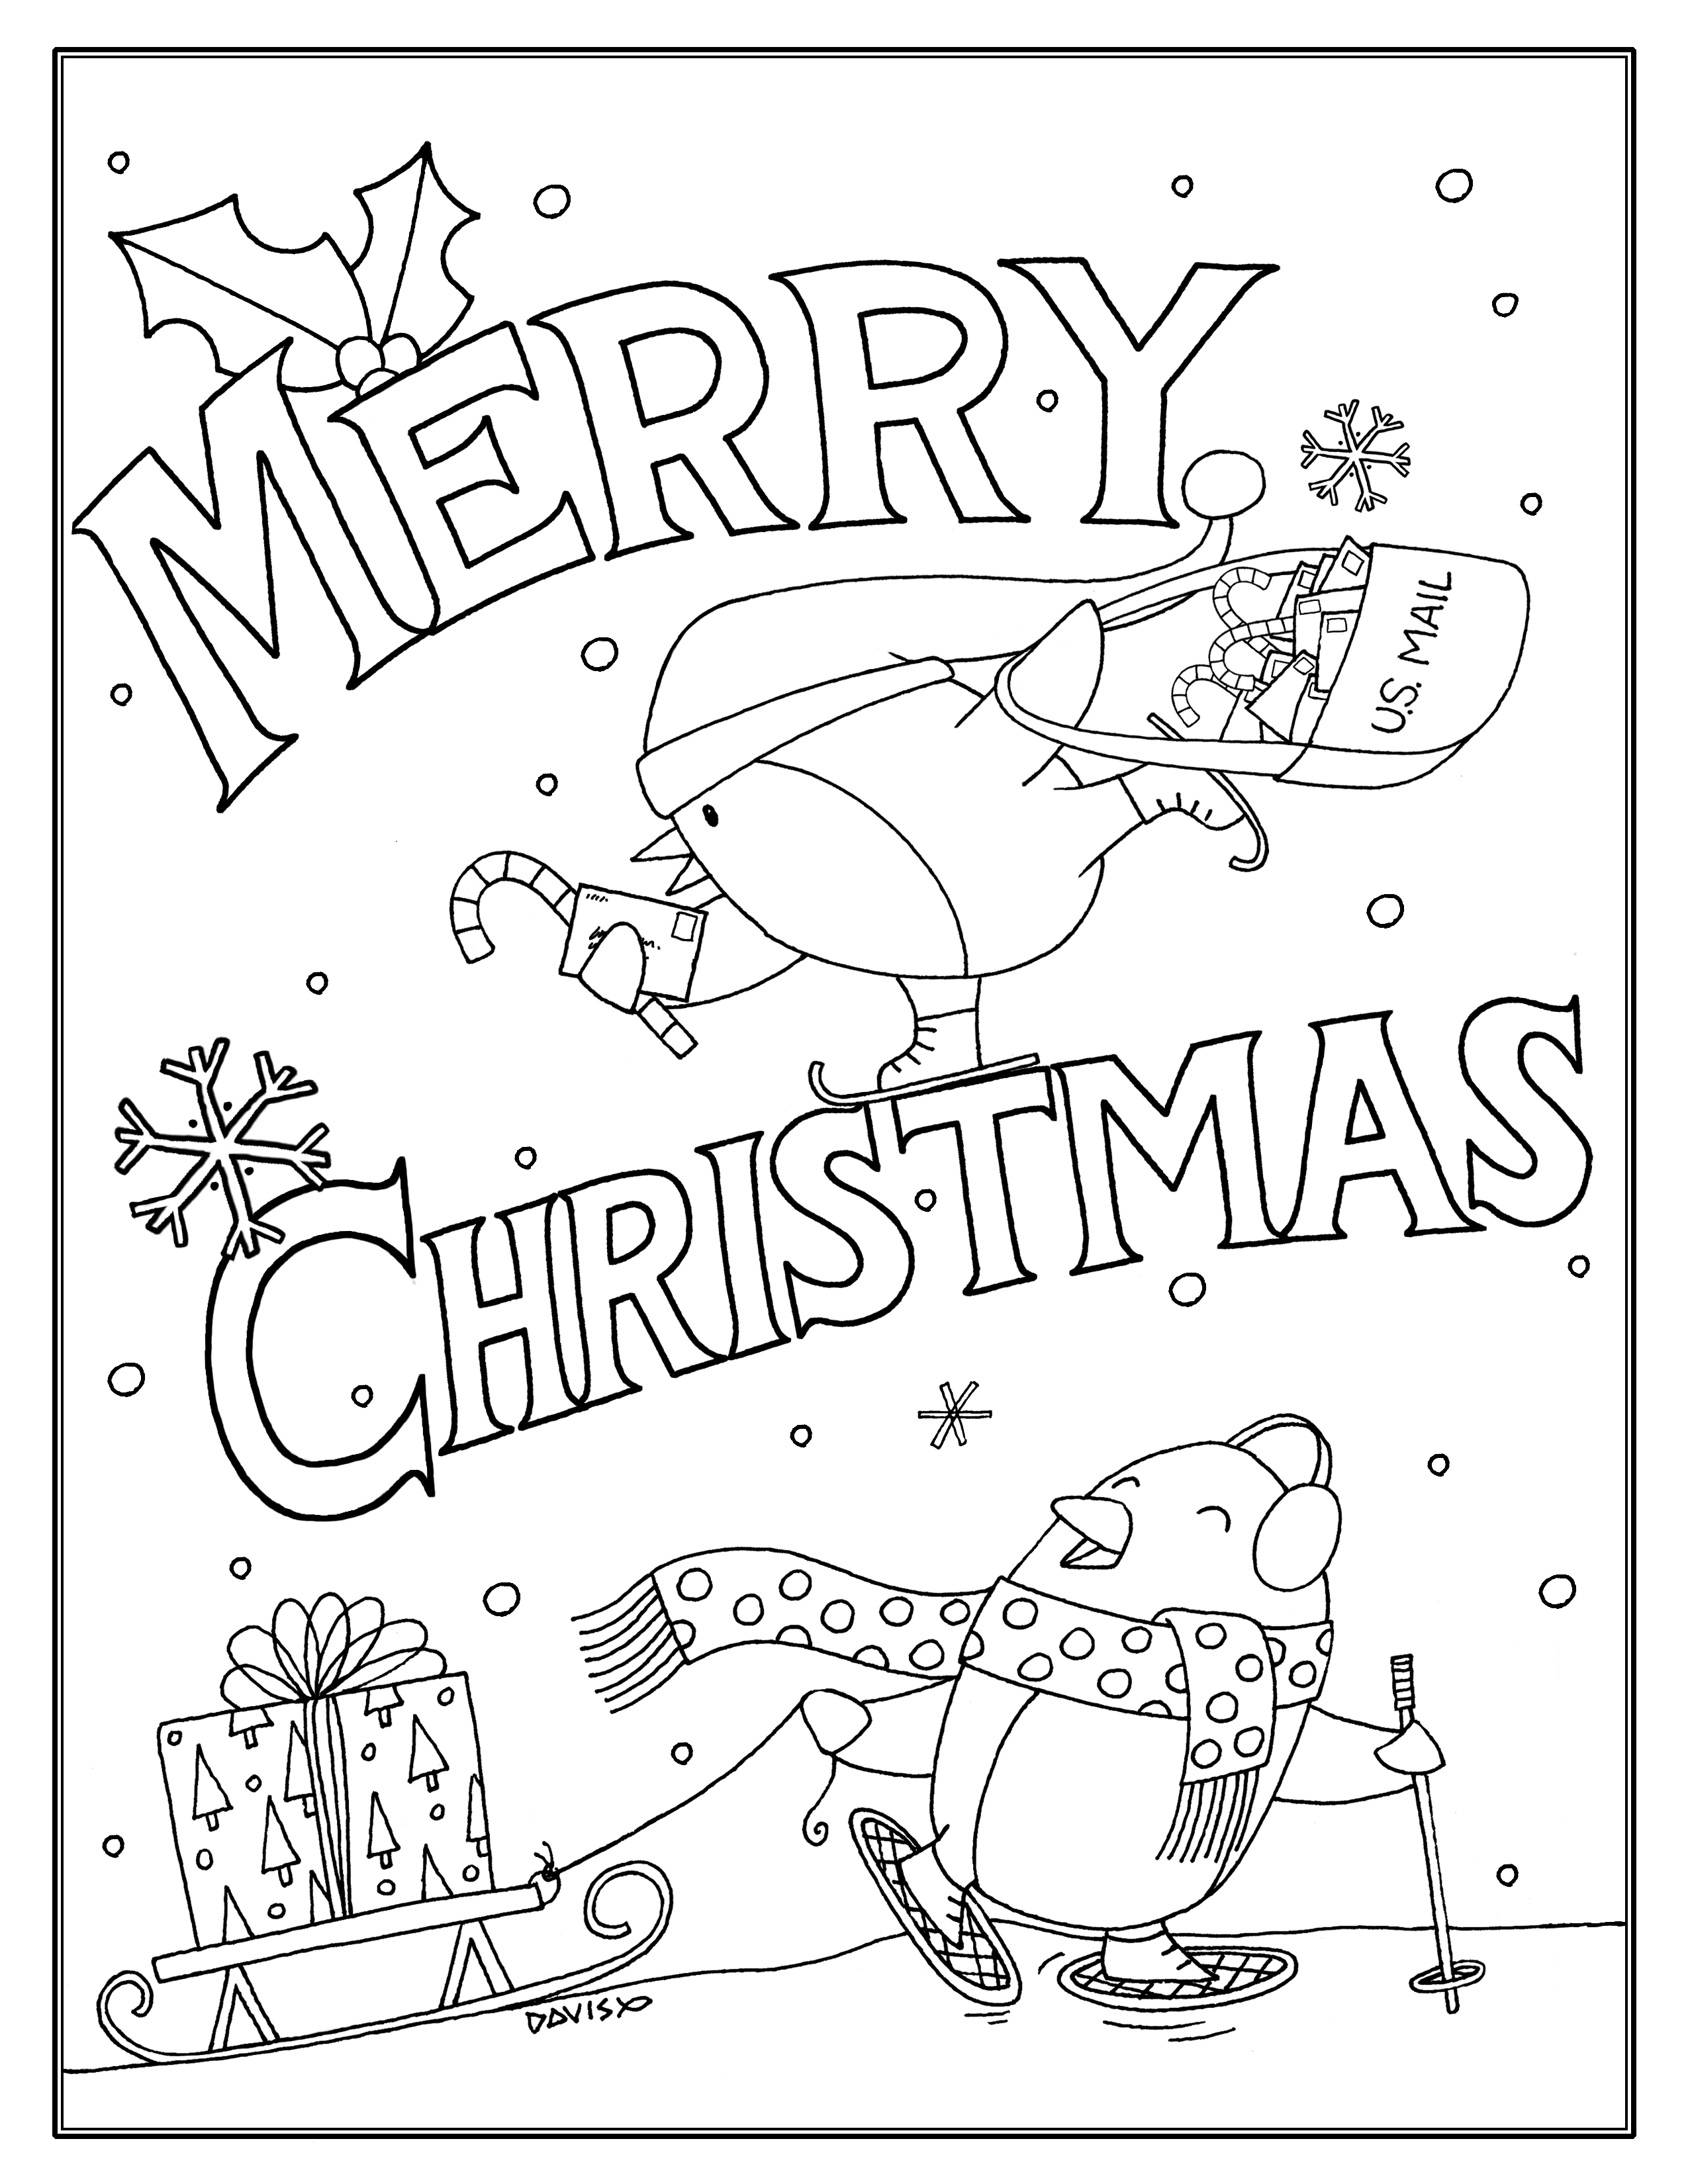 Christmas Cartoon Drawing Beautiful Image